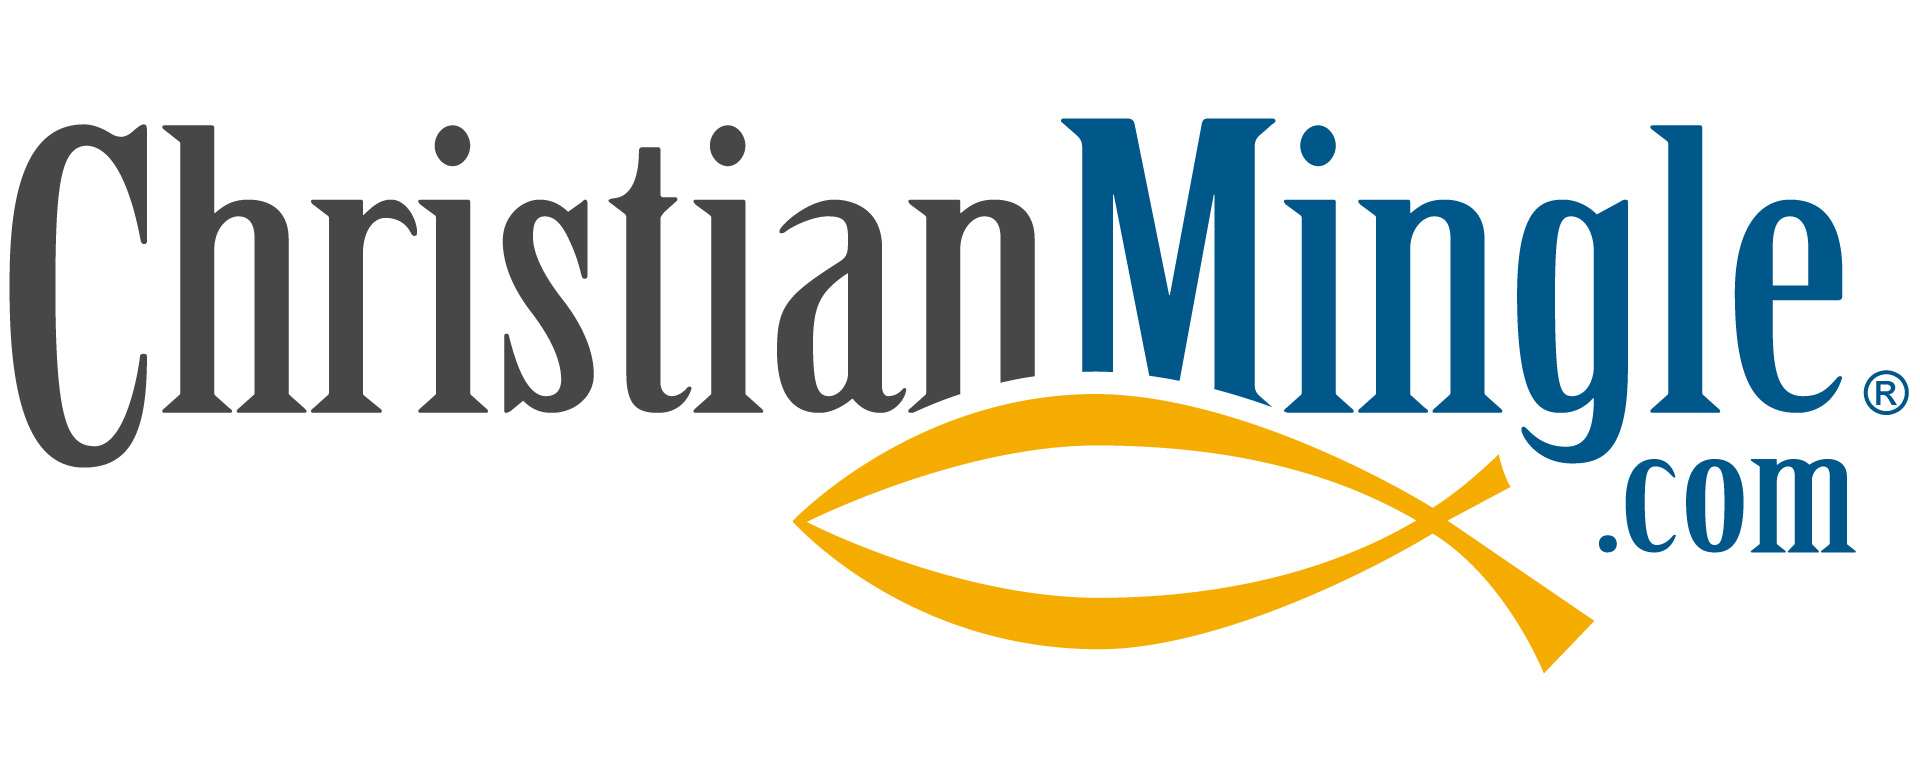 ChristianMingle Logo